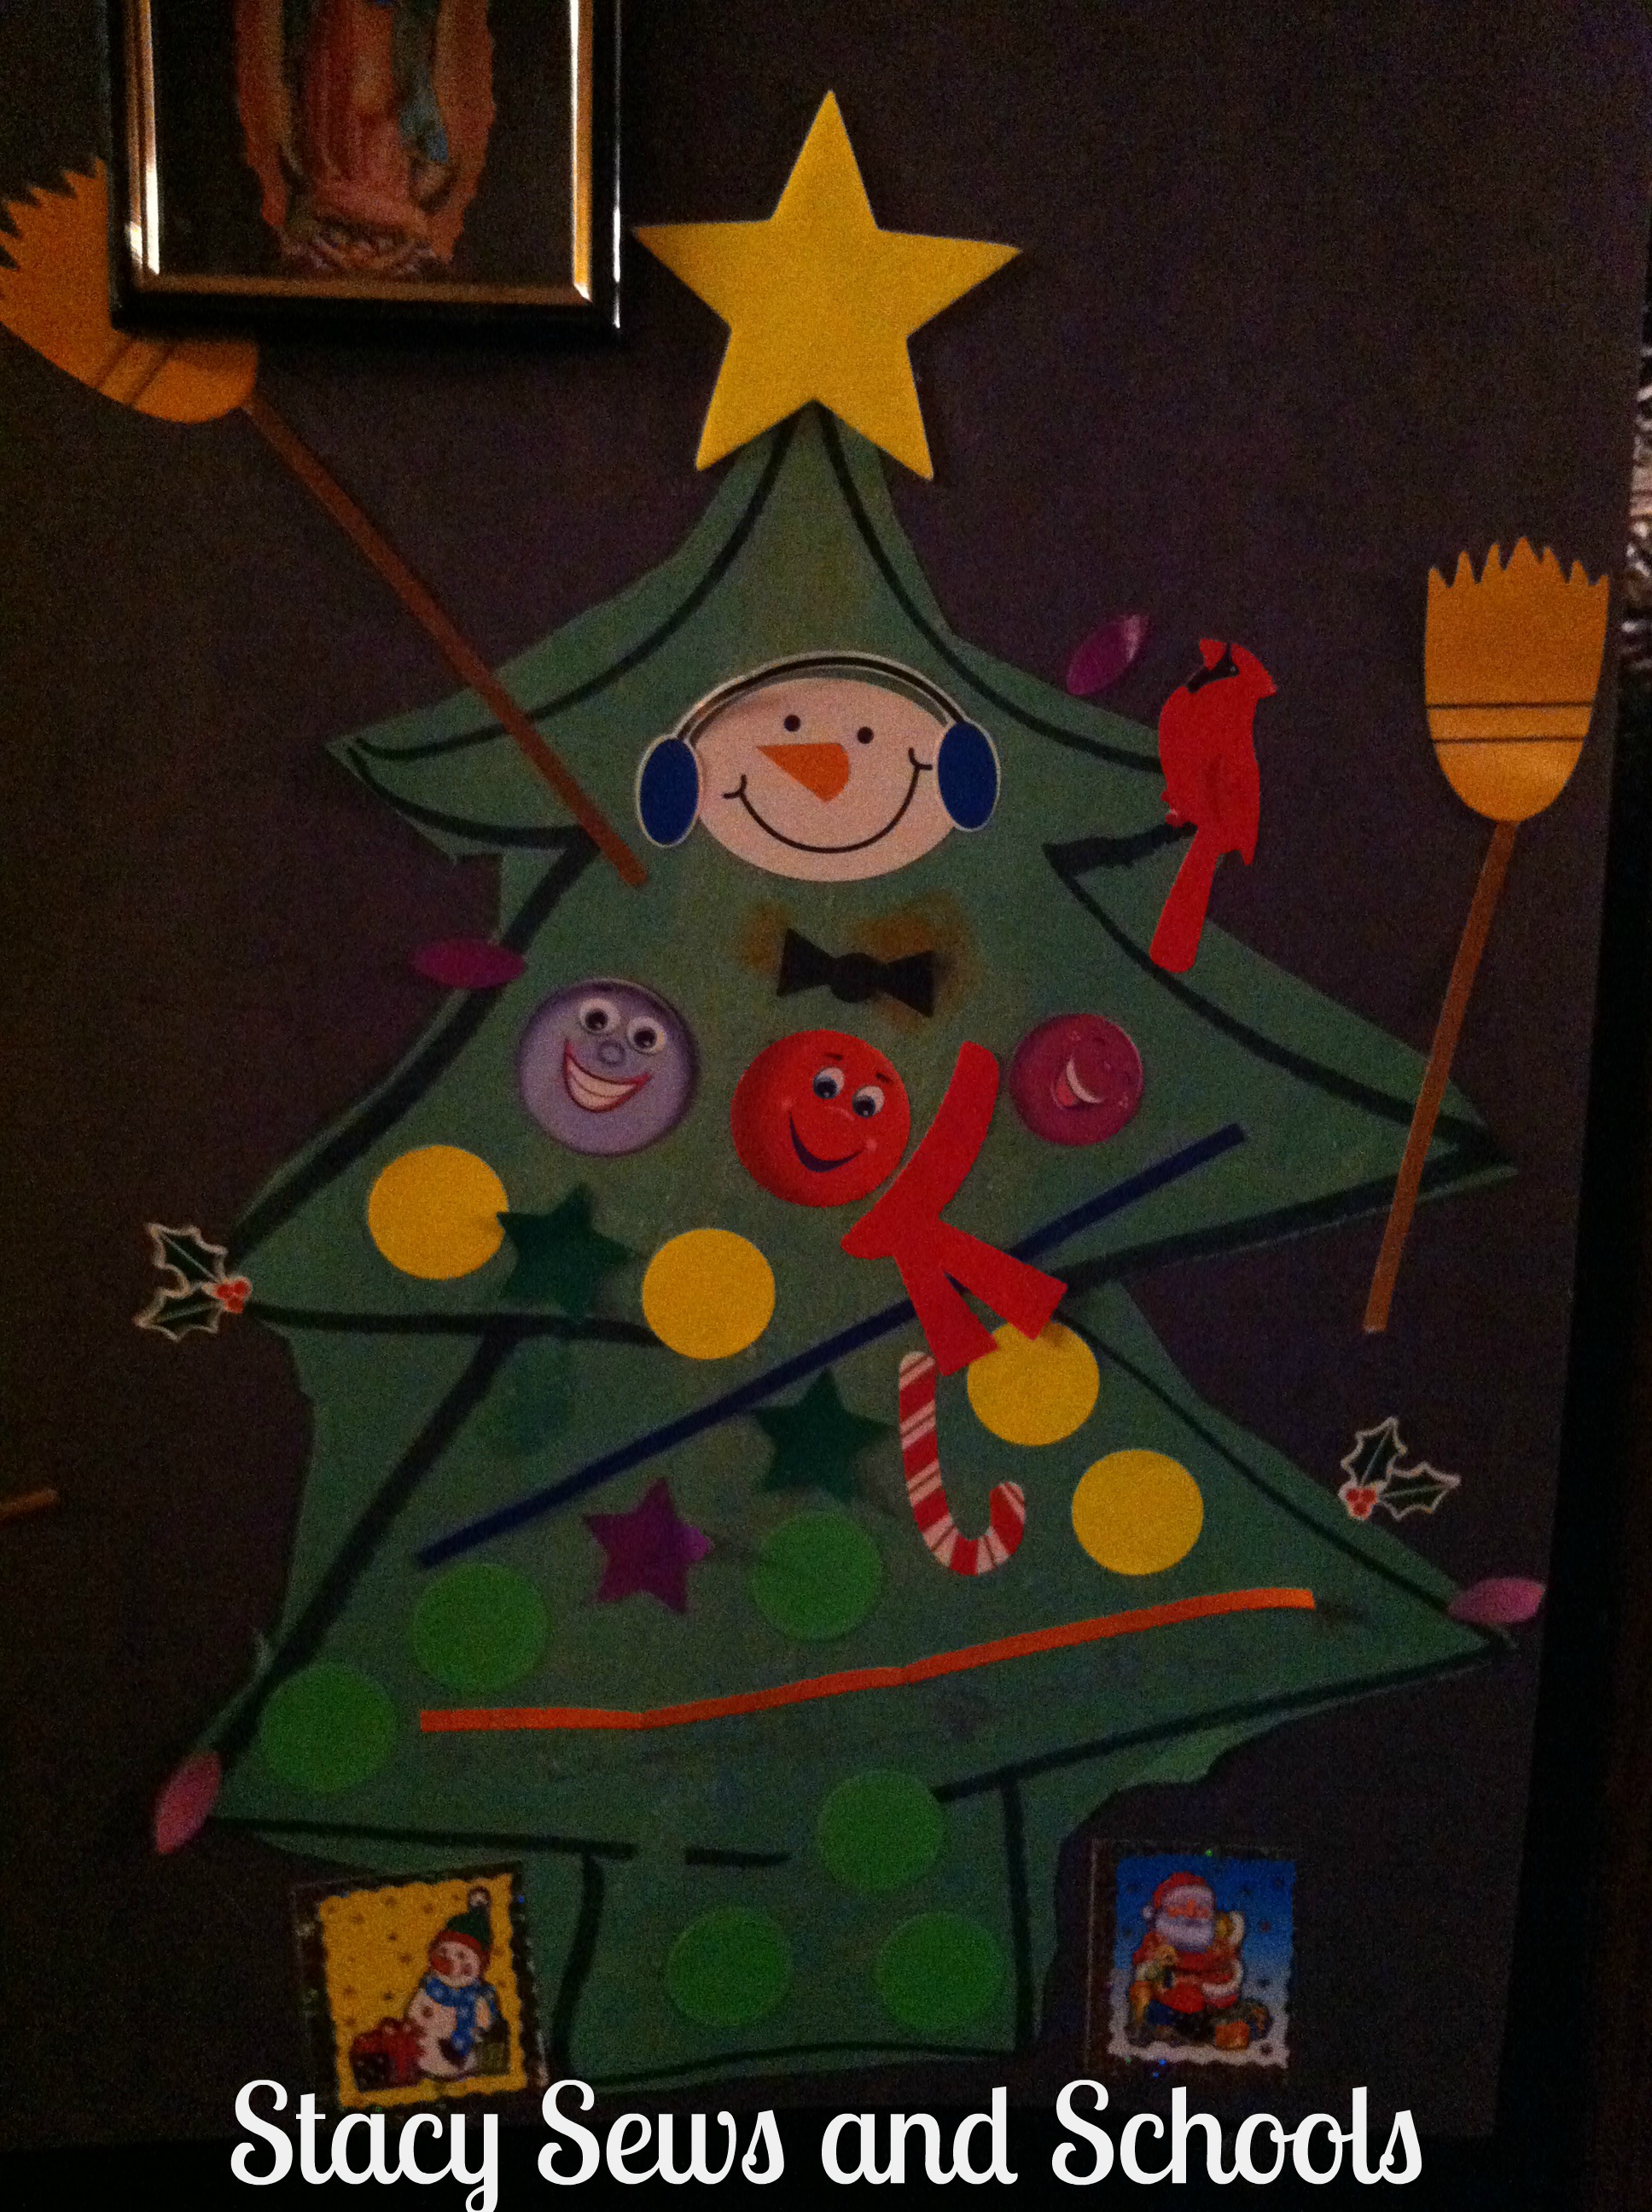 Colin's Christmas tree art